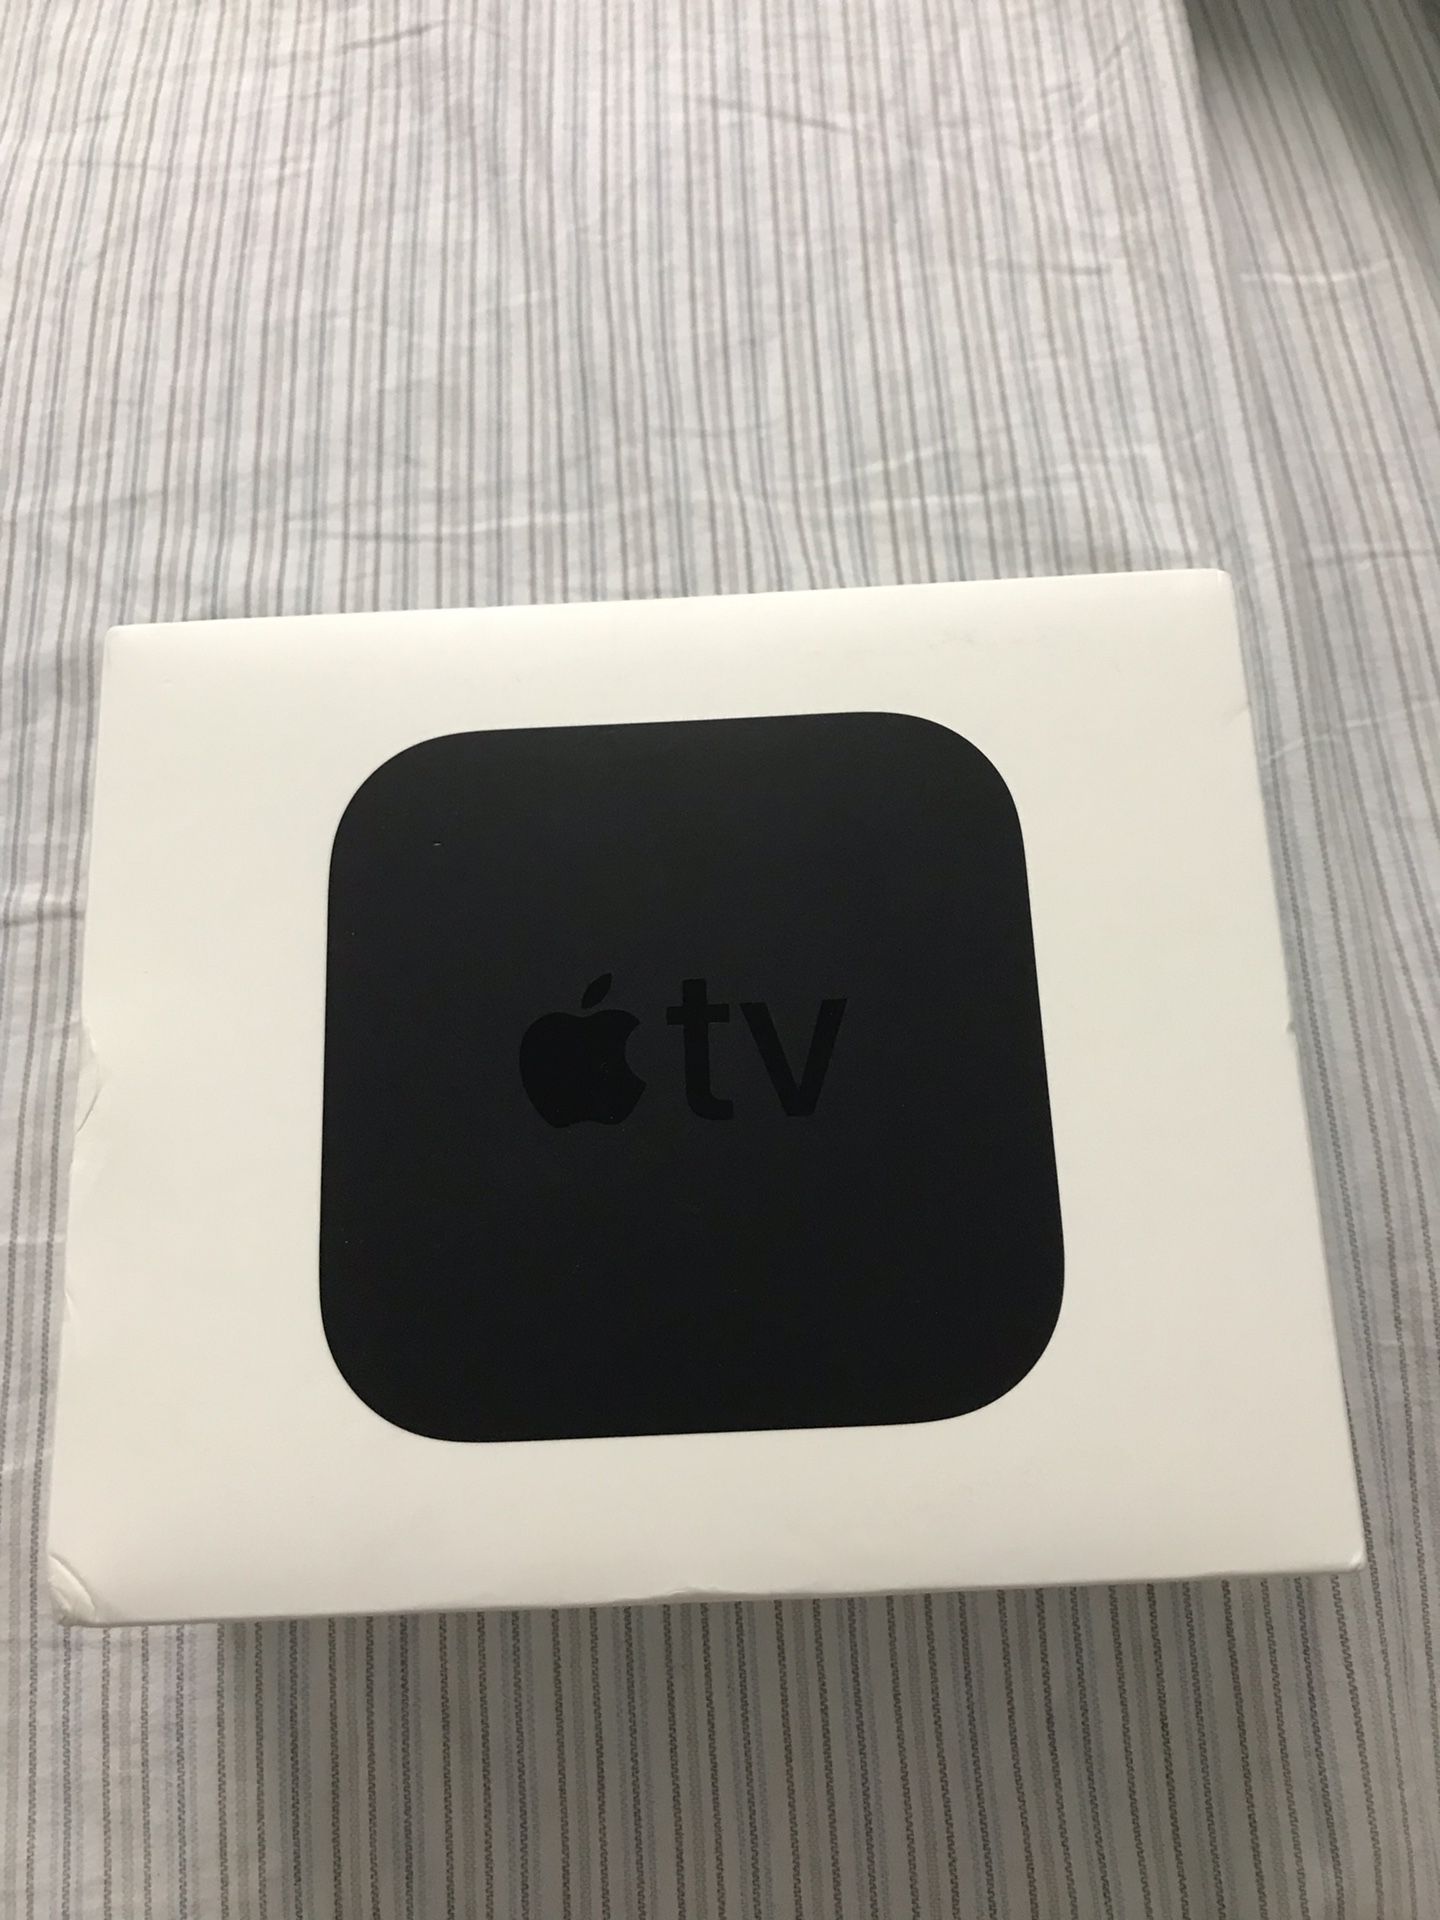 Apple TV-32 GB